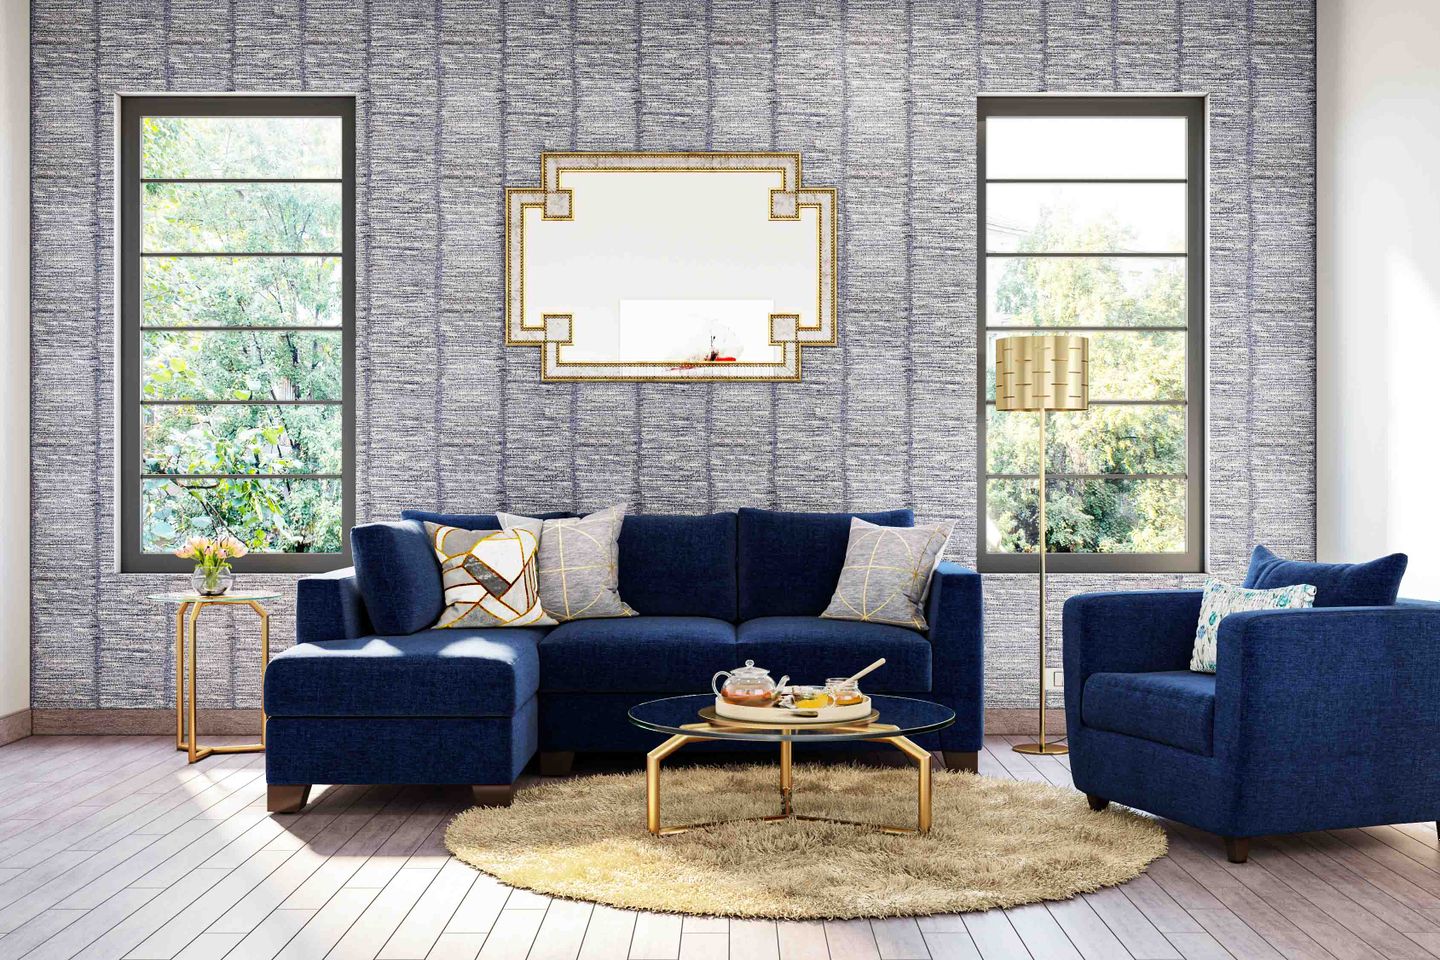 11X8 Ft Blue And White Wallpaper Design - Livspace